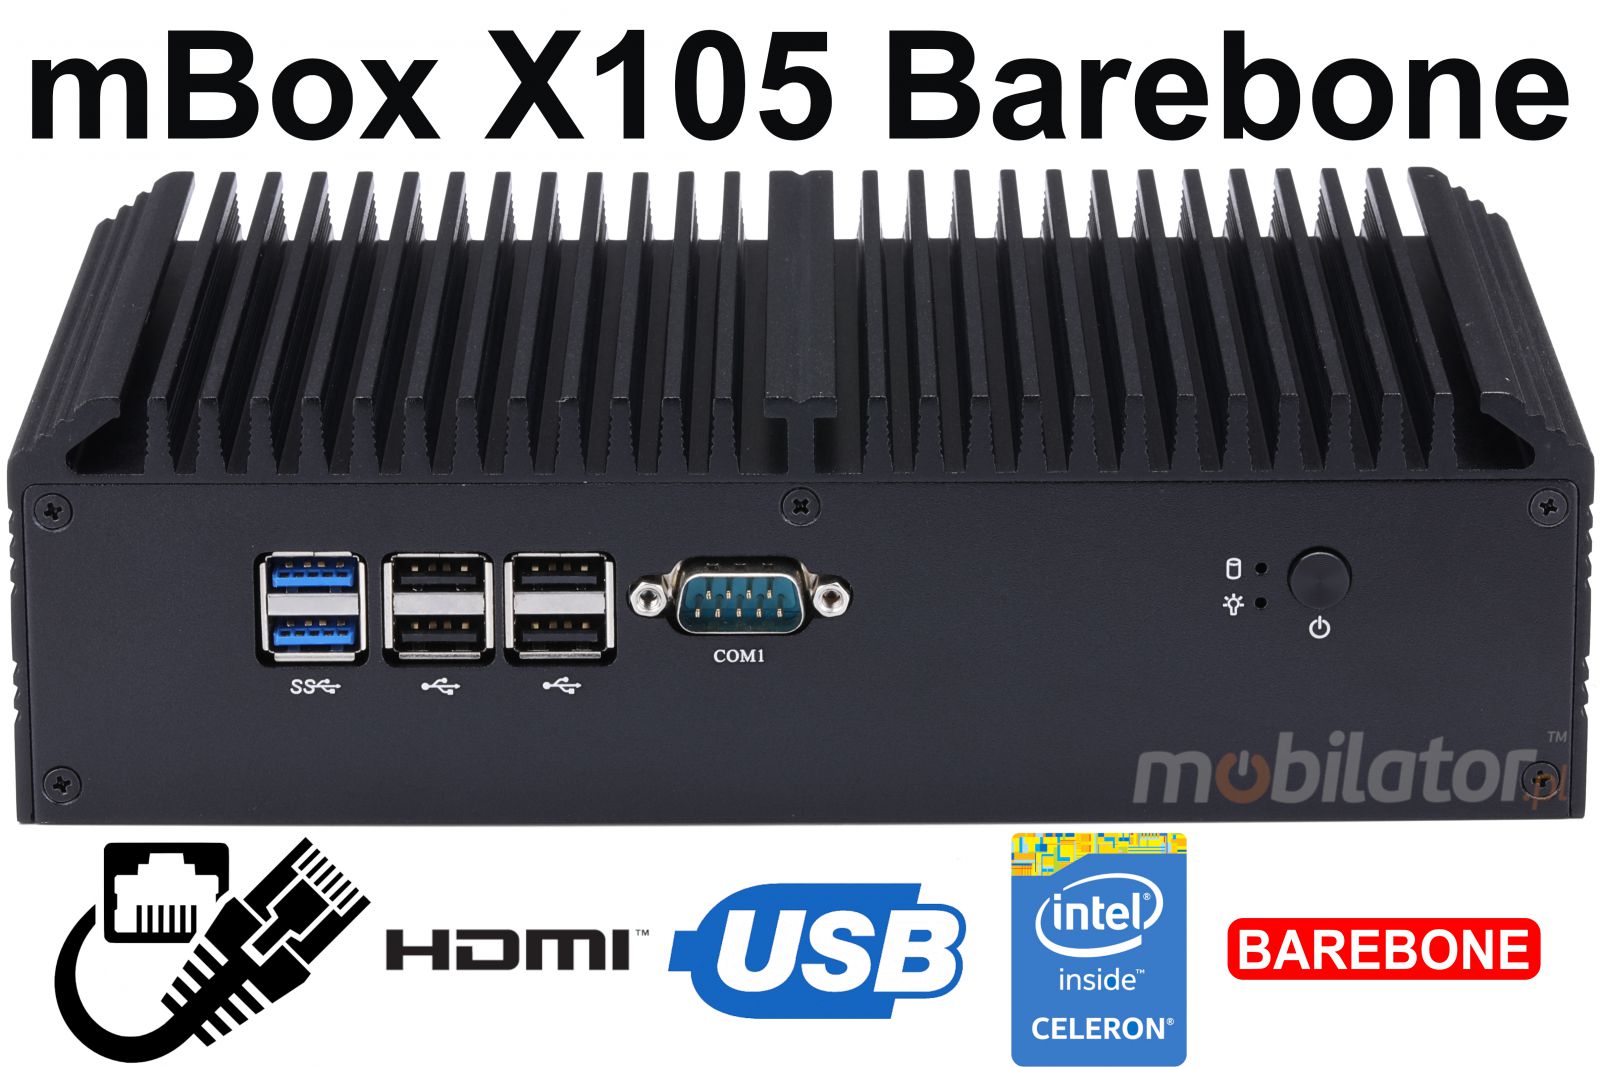 mBox X155 Barebone - Industrial Mini Computer with Intel Celeron 3865U Processor - Title image